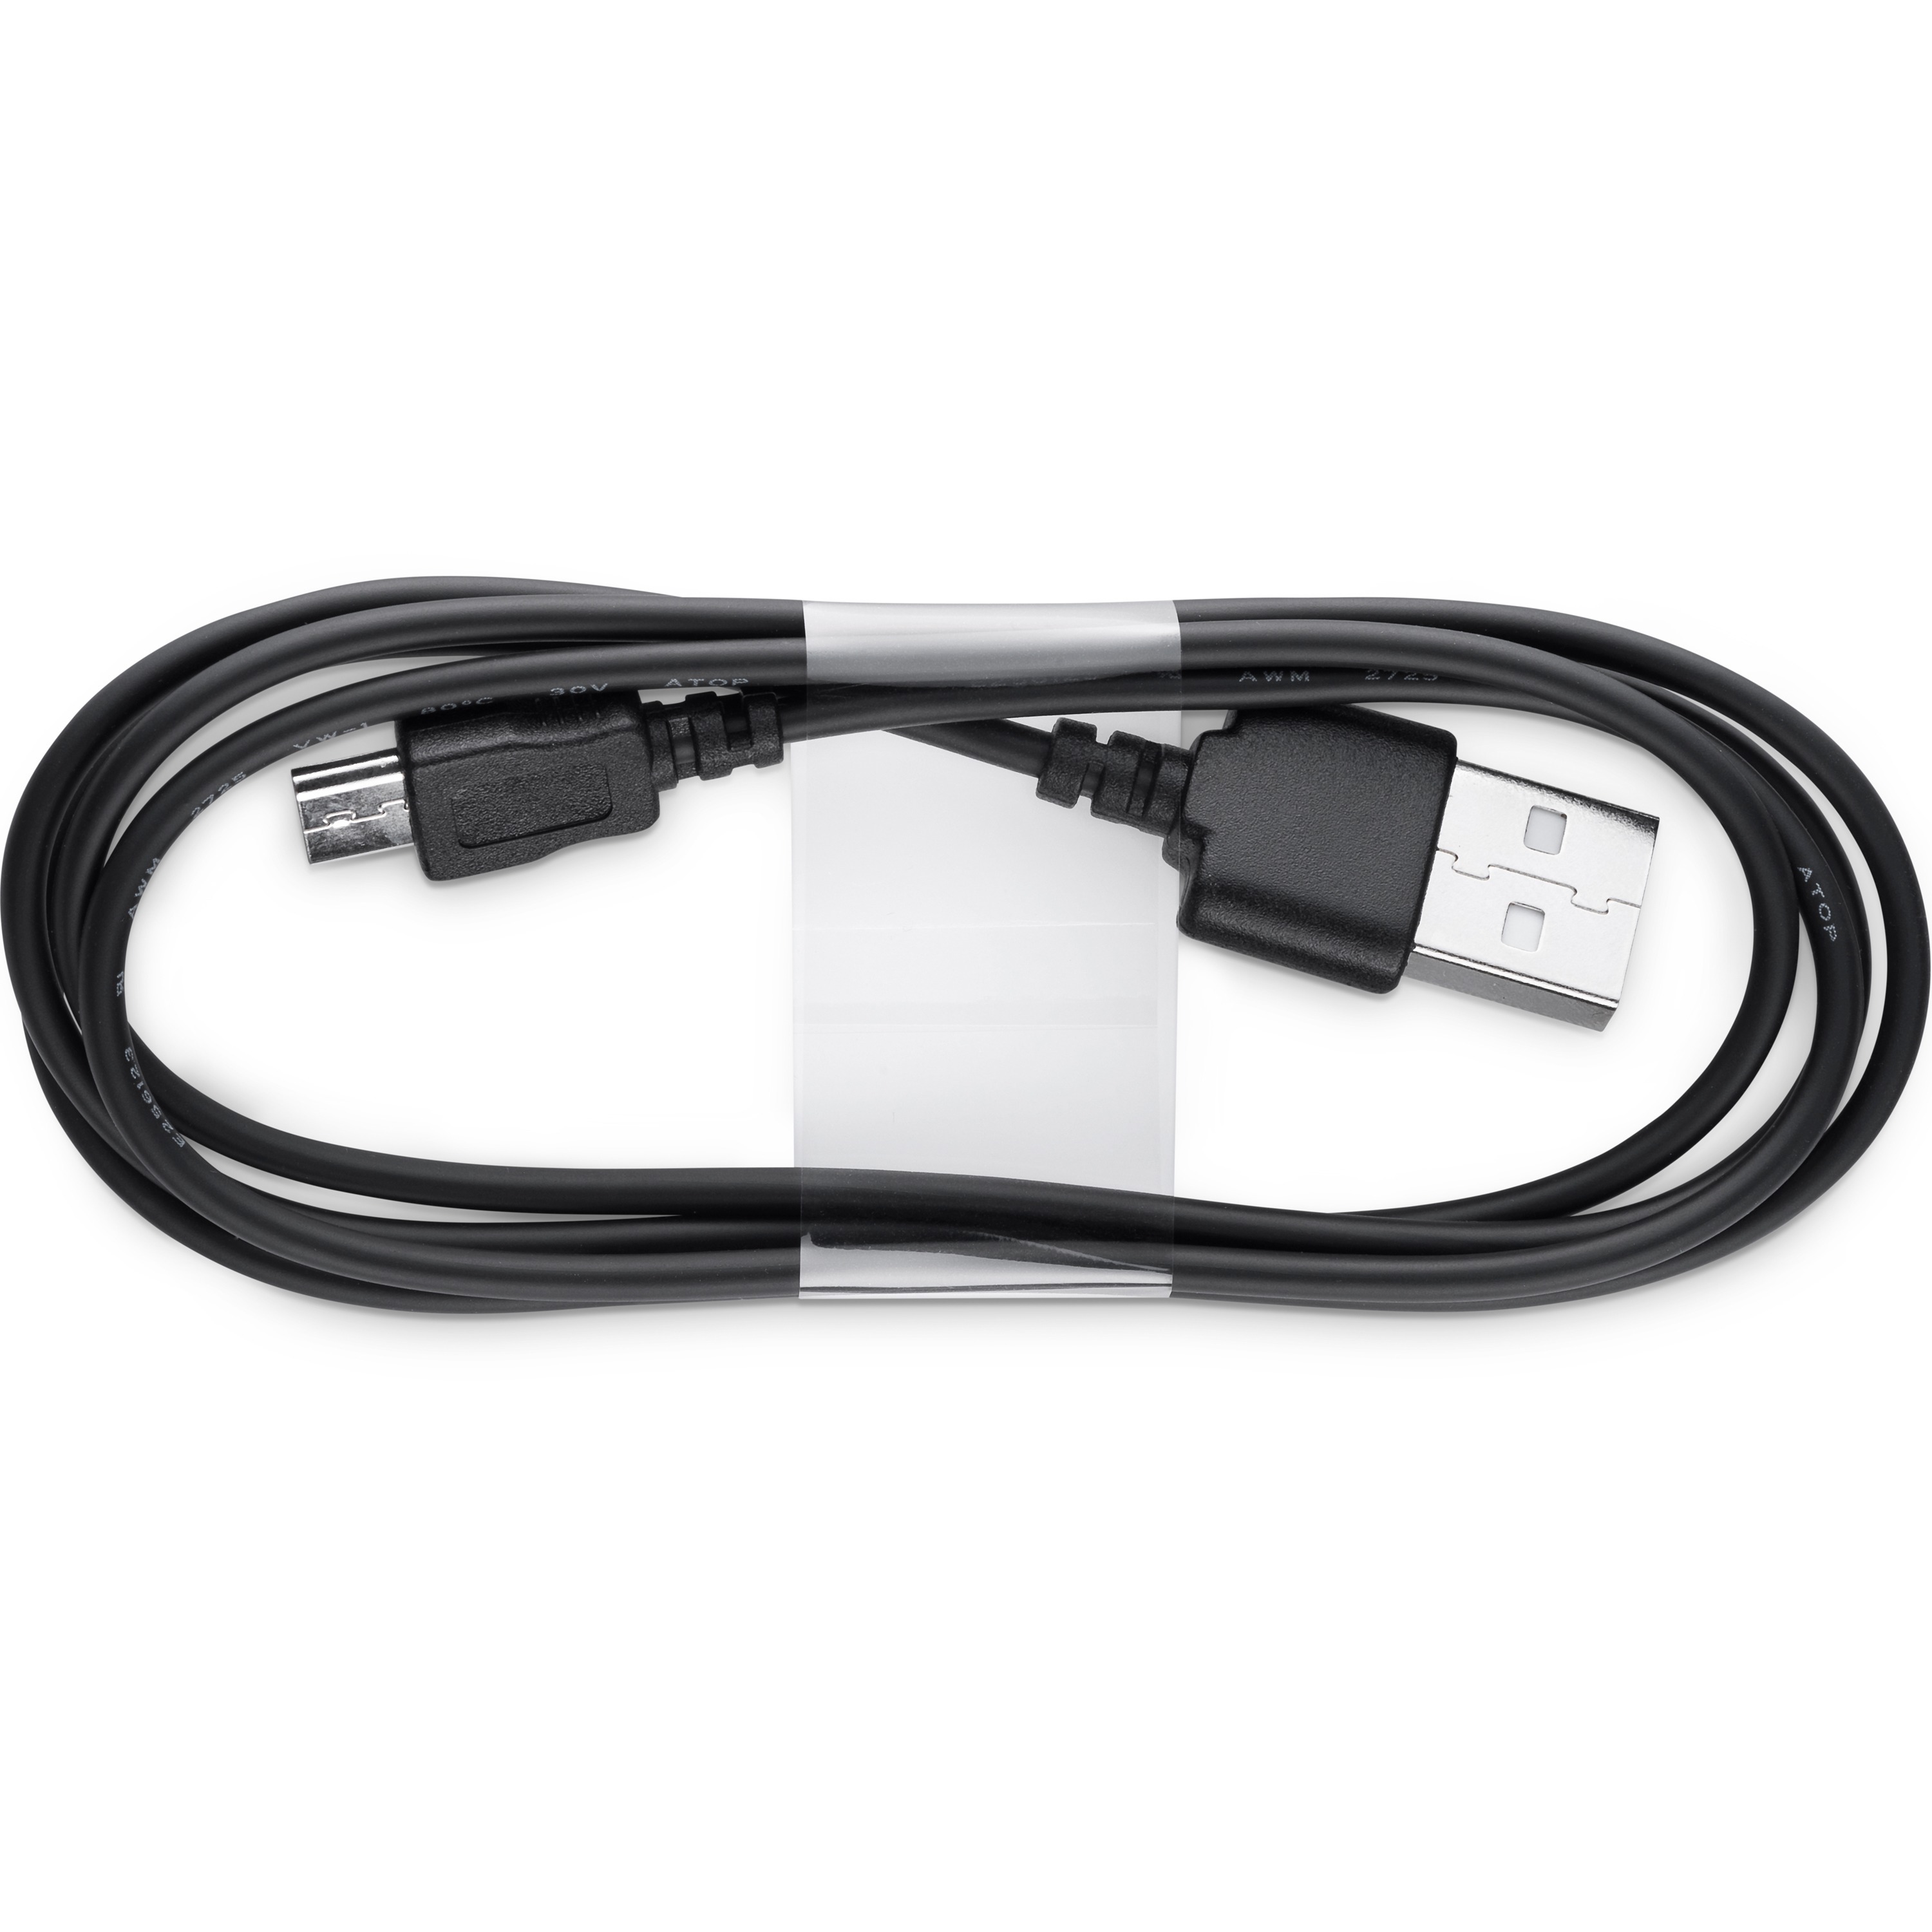 WACOM ACK42206 Black USB Cable - image 2 of 2